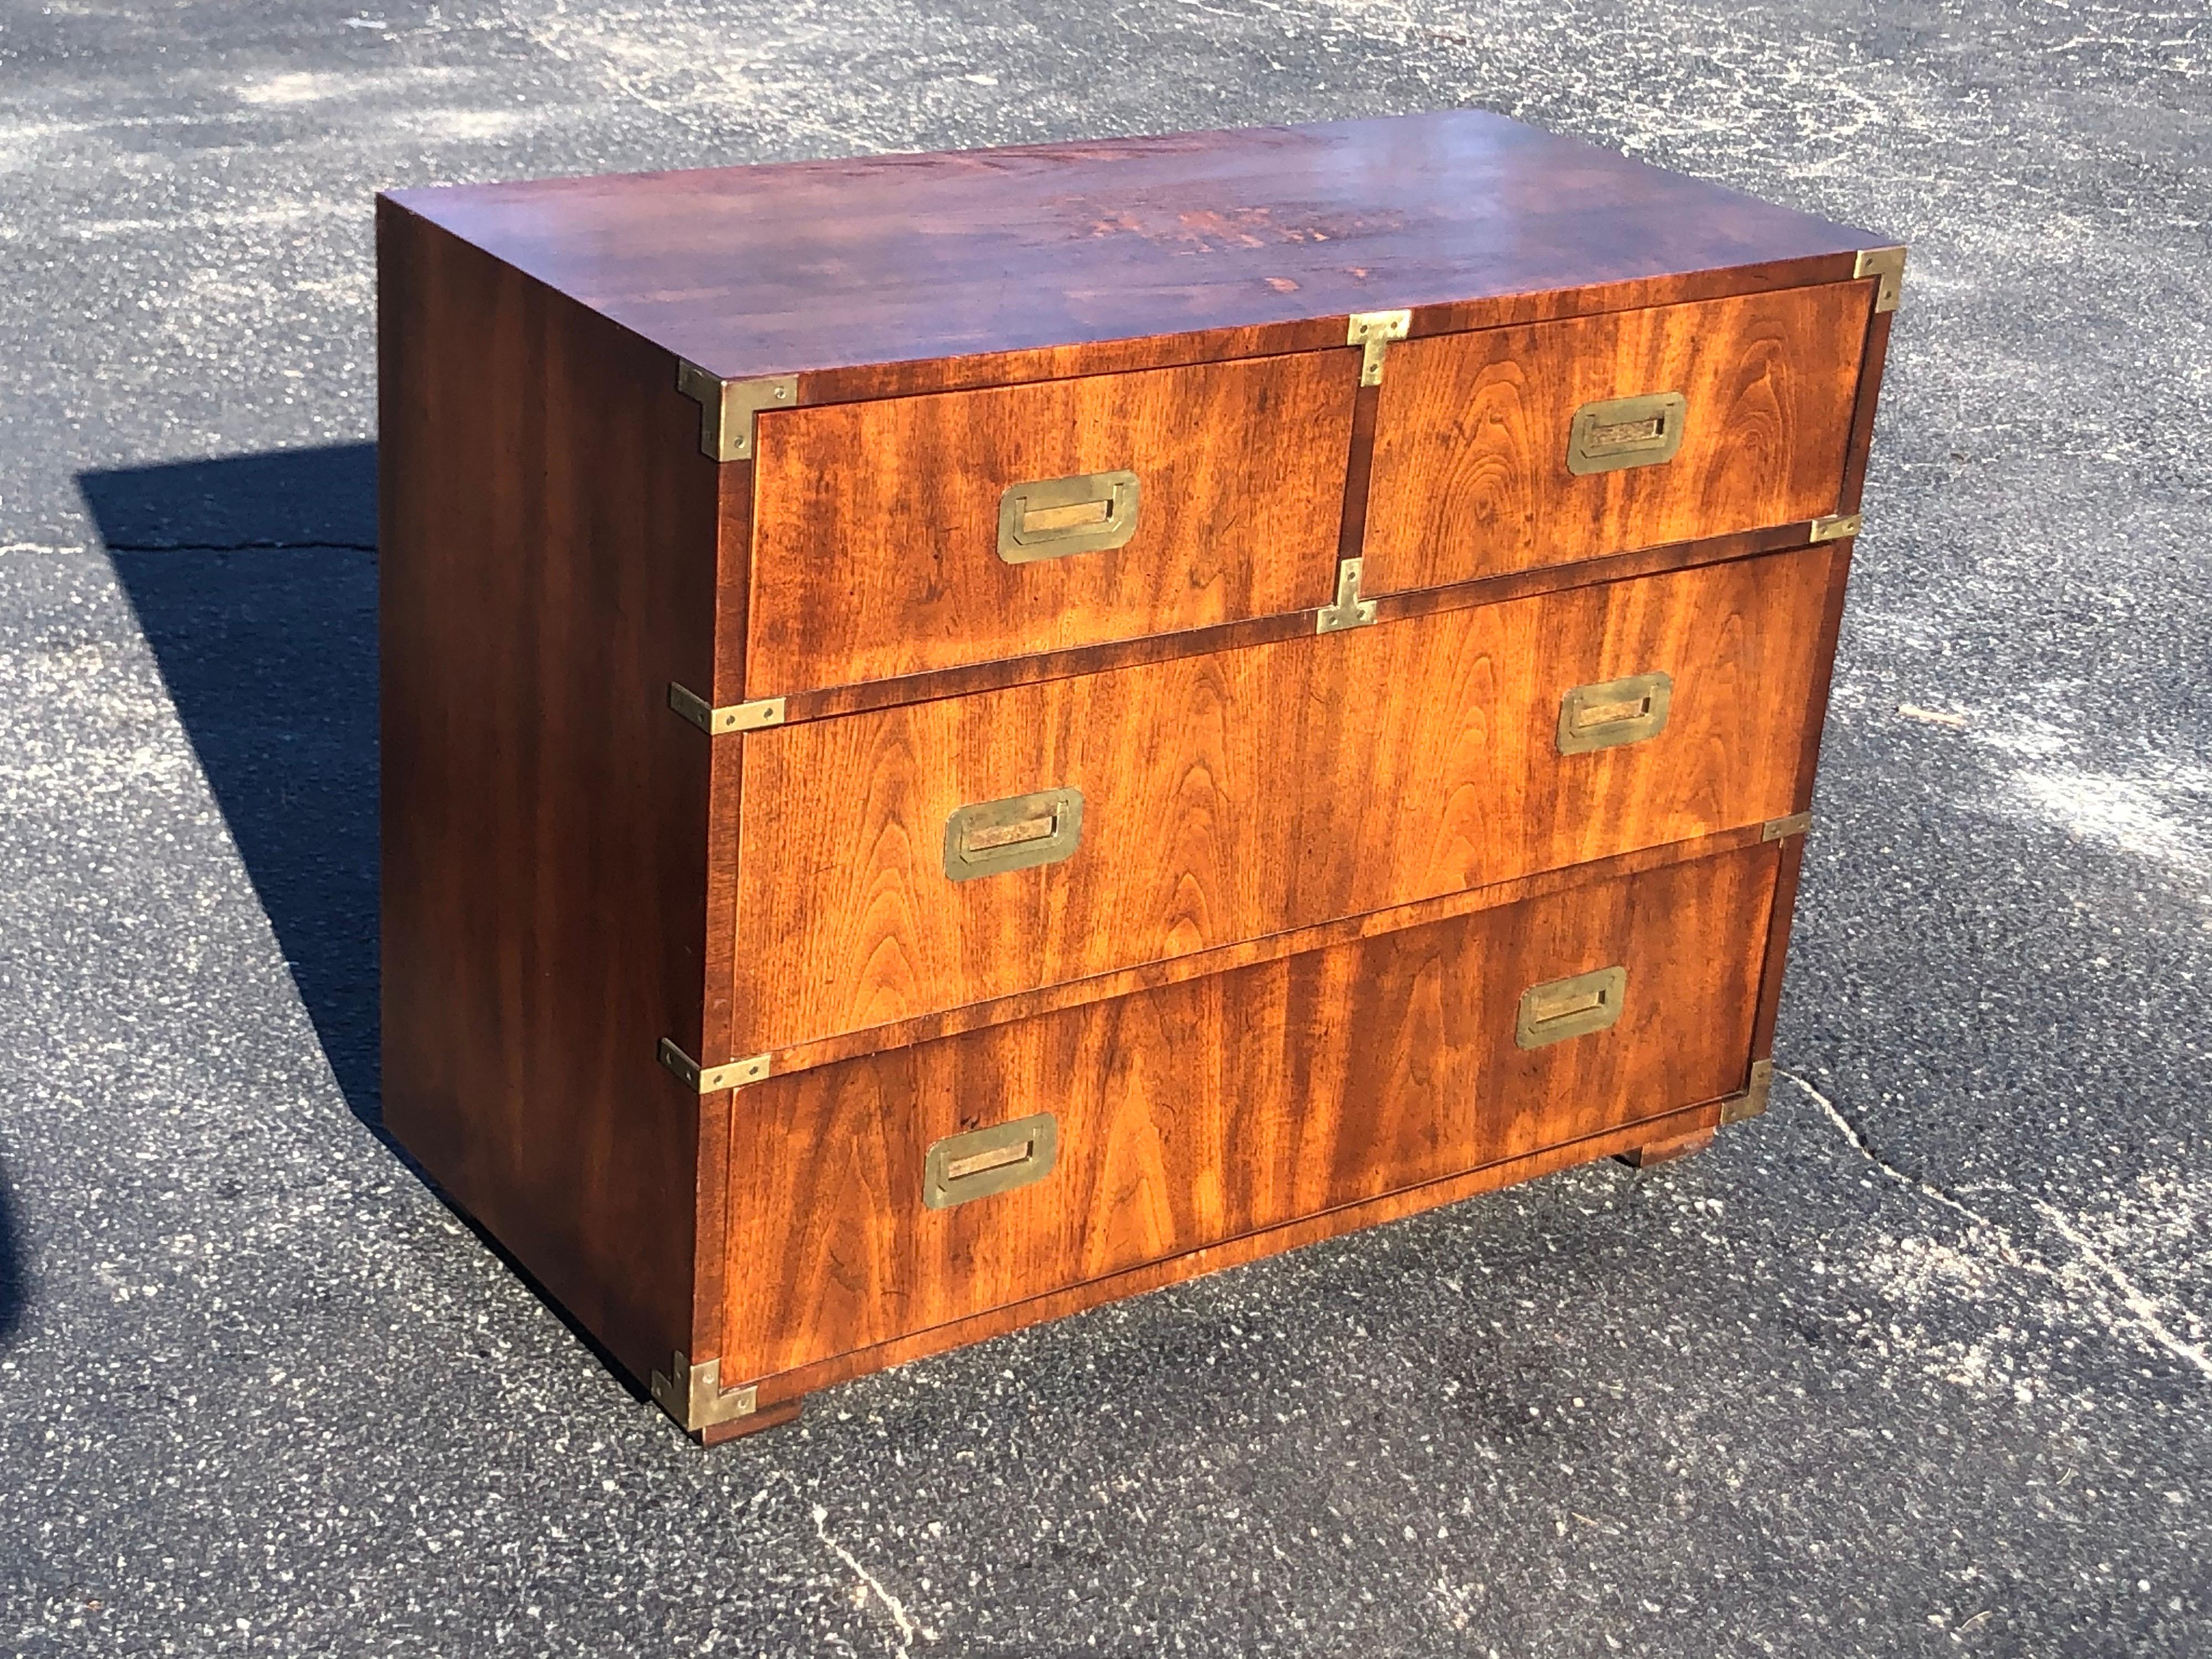 Henredon walnut campaign dresser. Nice chunky brass hardware adorns this classic, timeless piece. Great storage too.